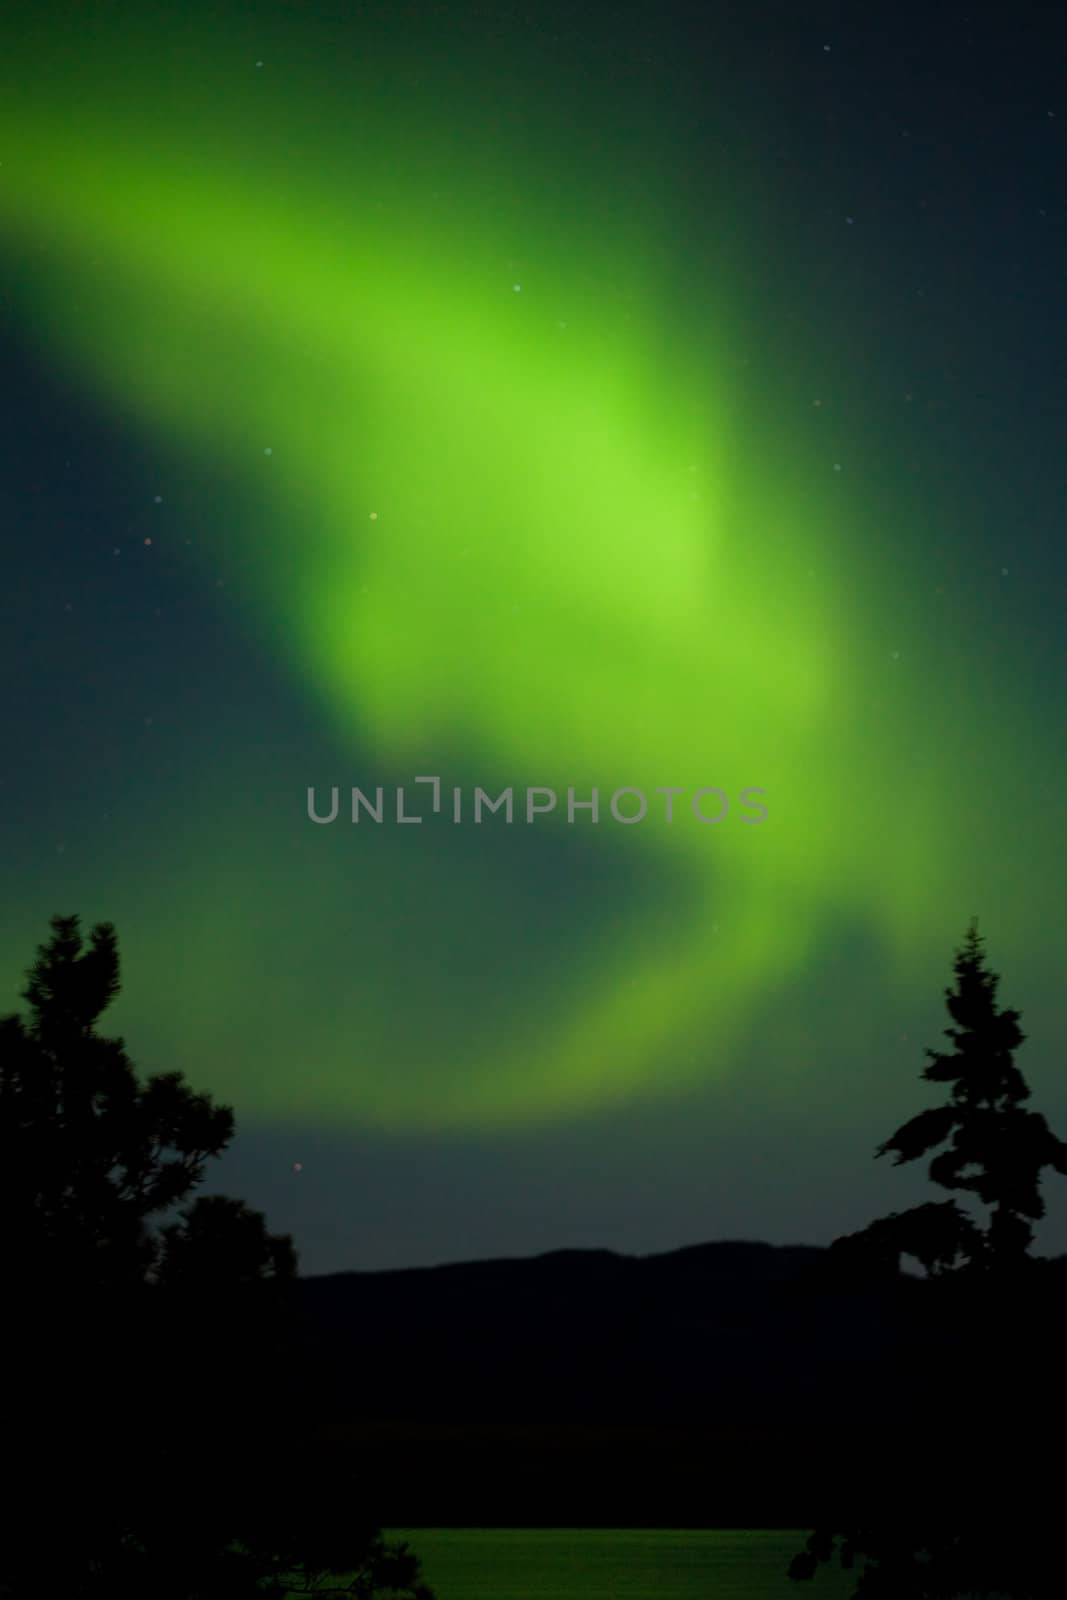 Aurora borealis (Northern lights) display by PiLens